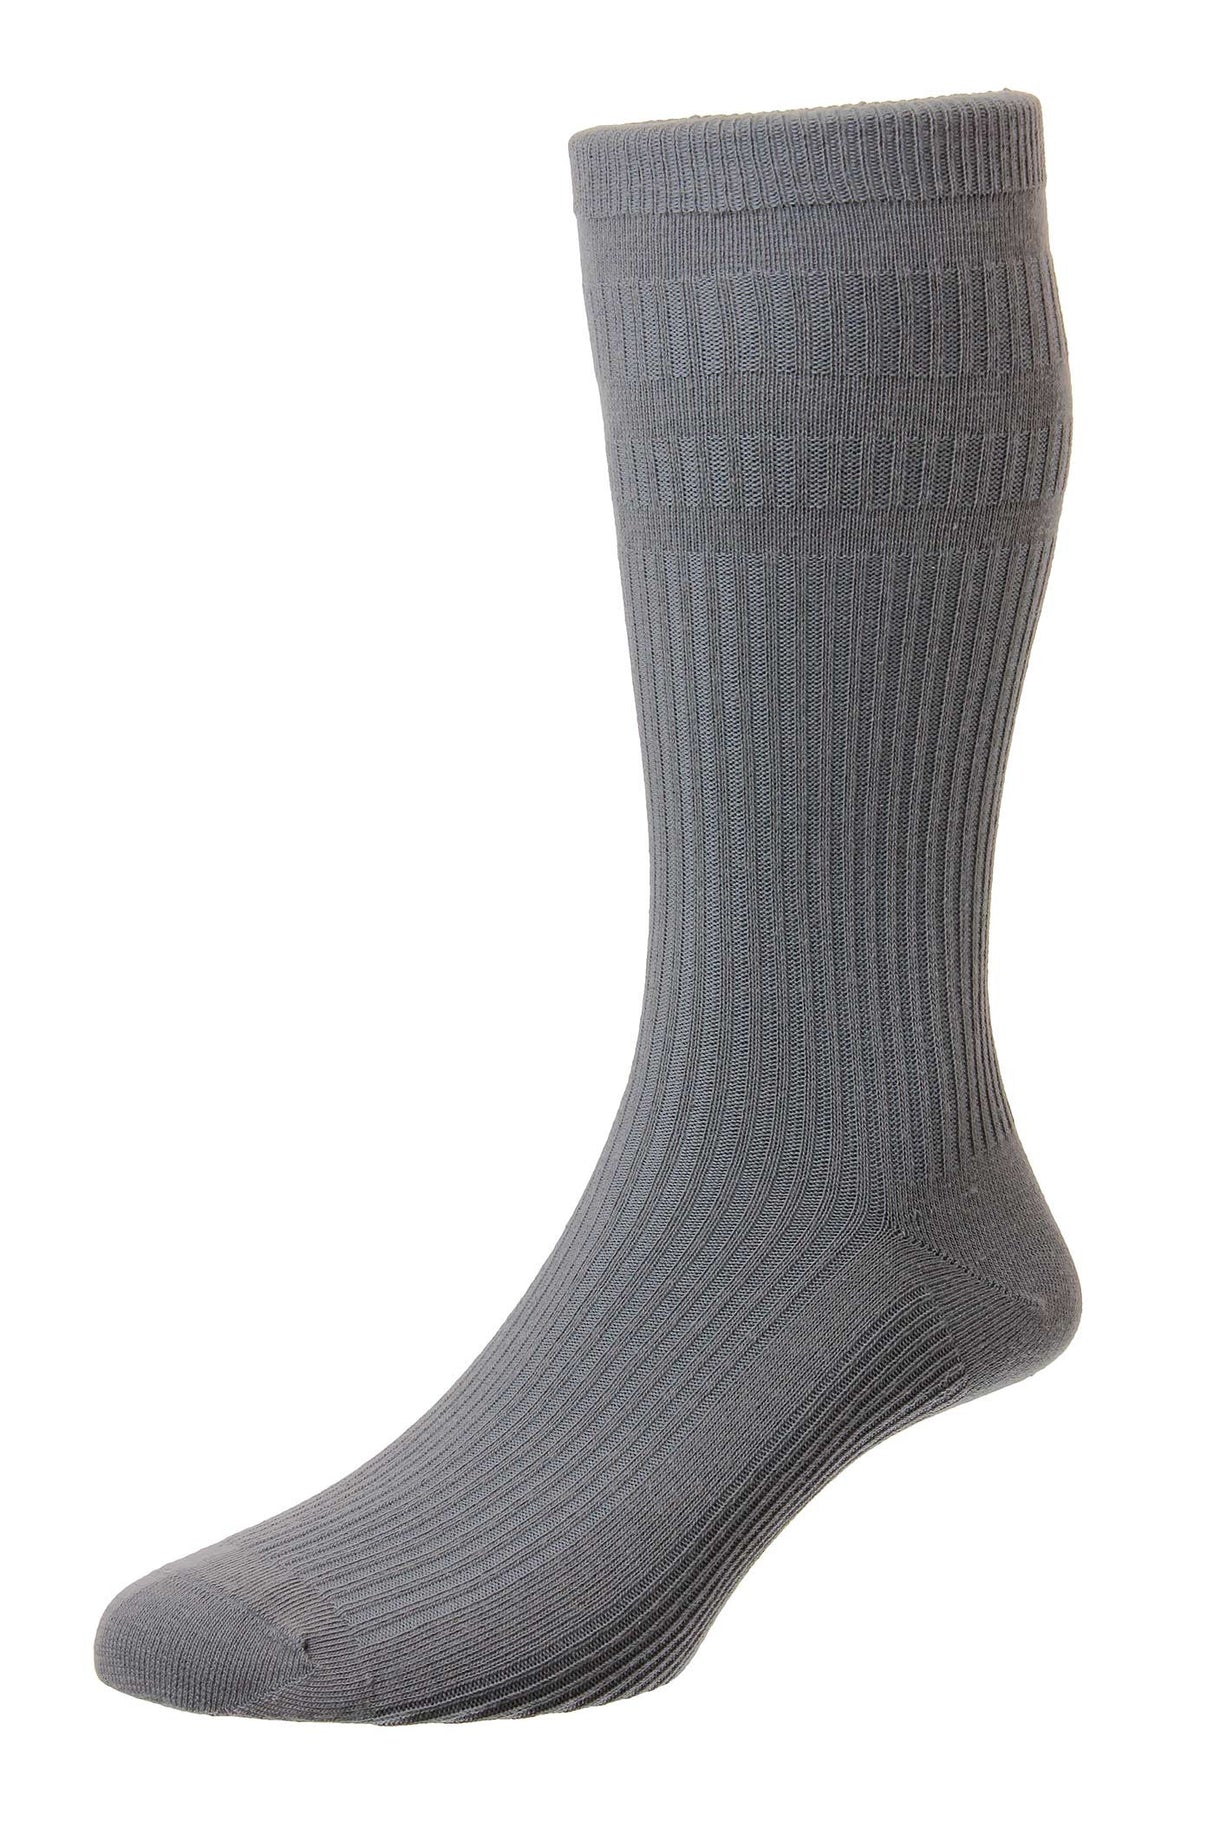 Hj Hall Soft Top Socks Grey